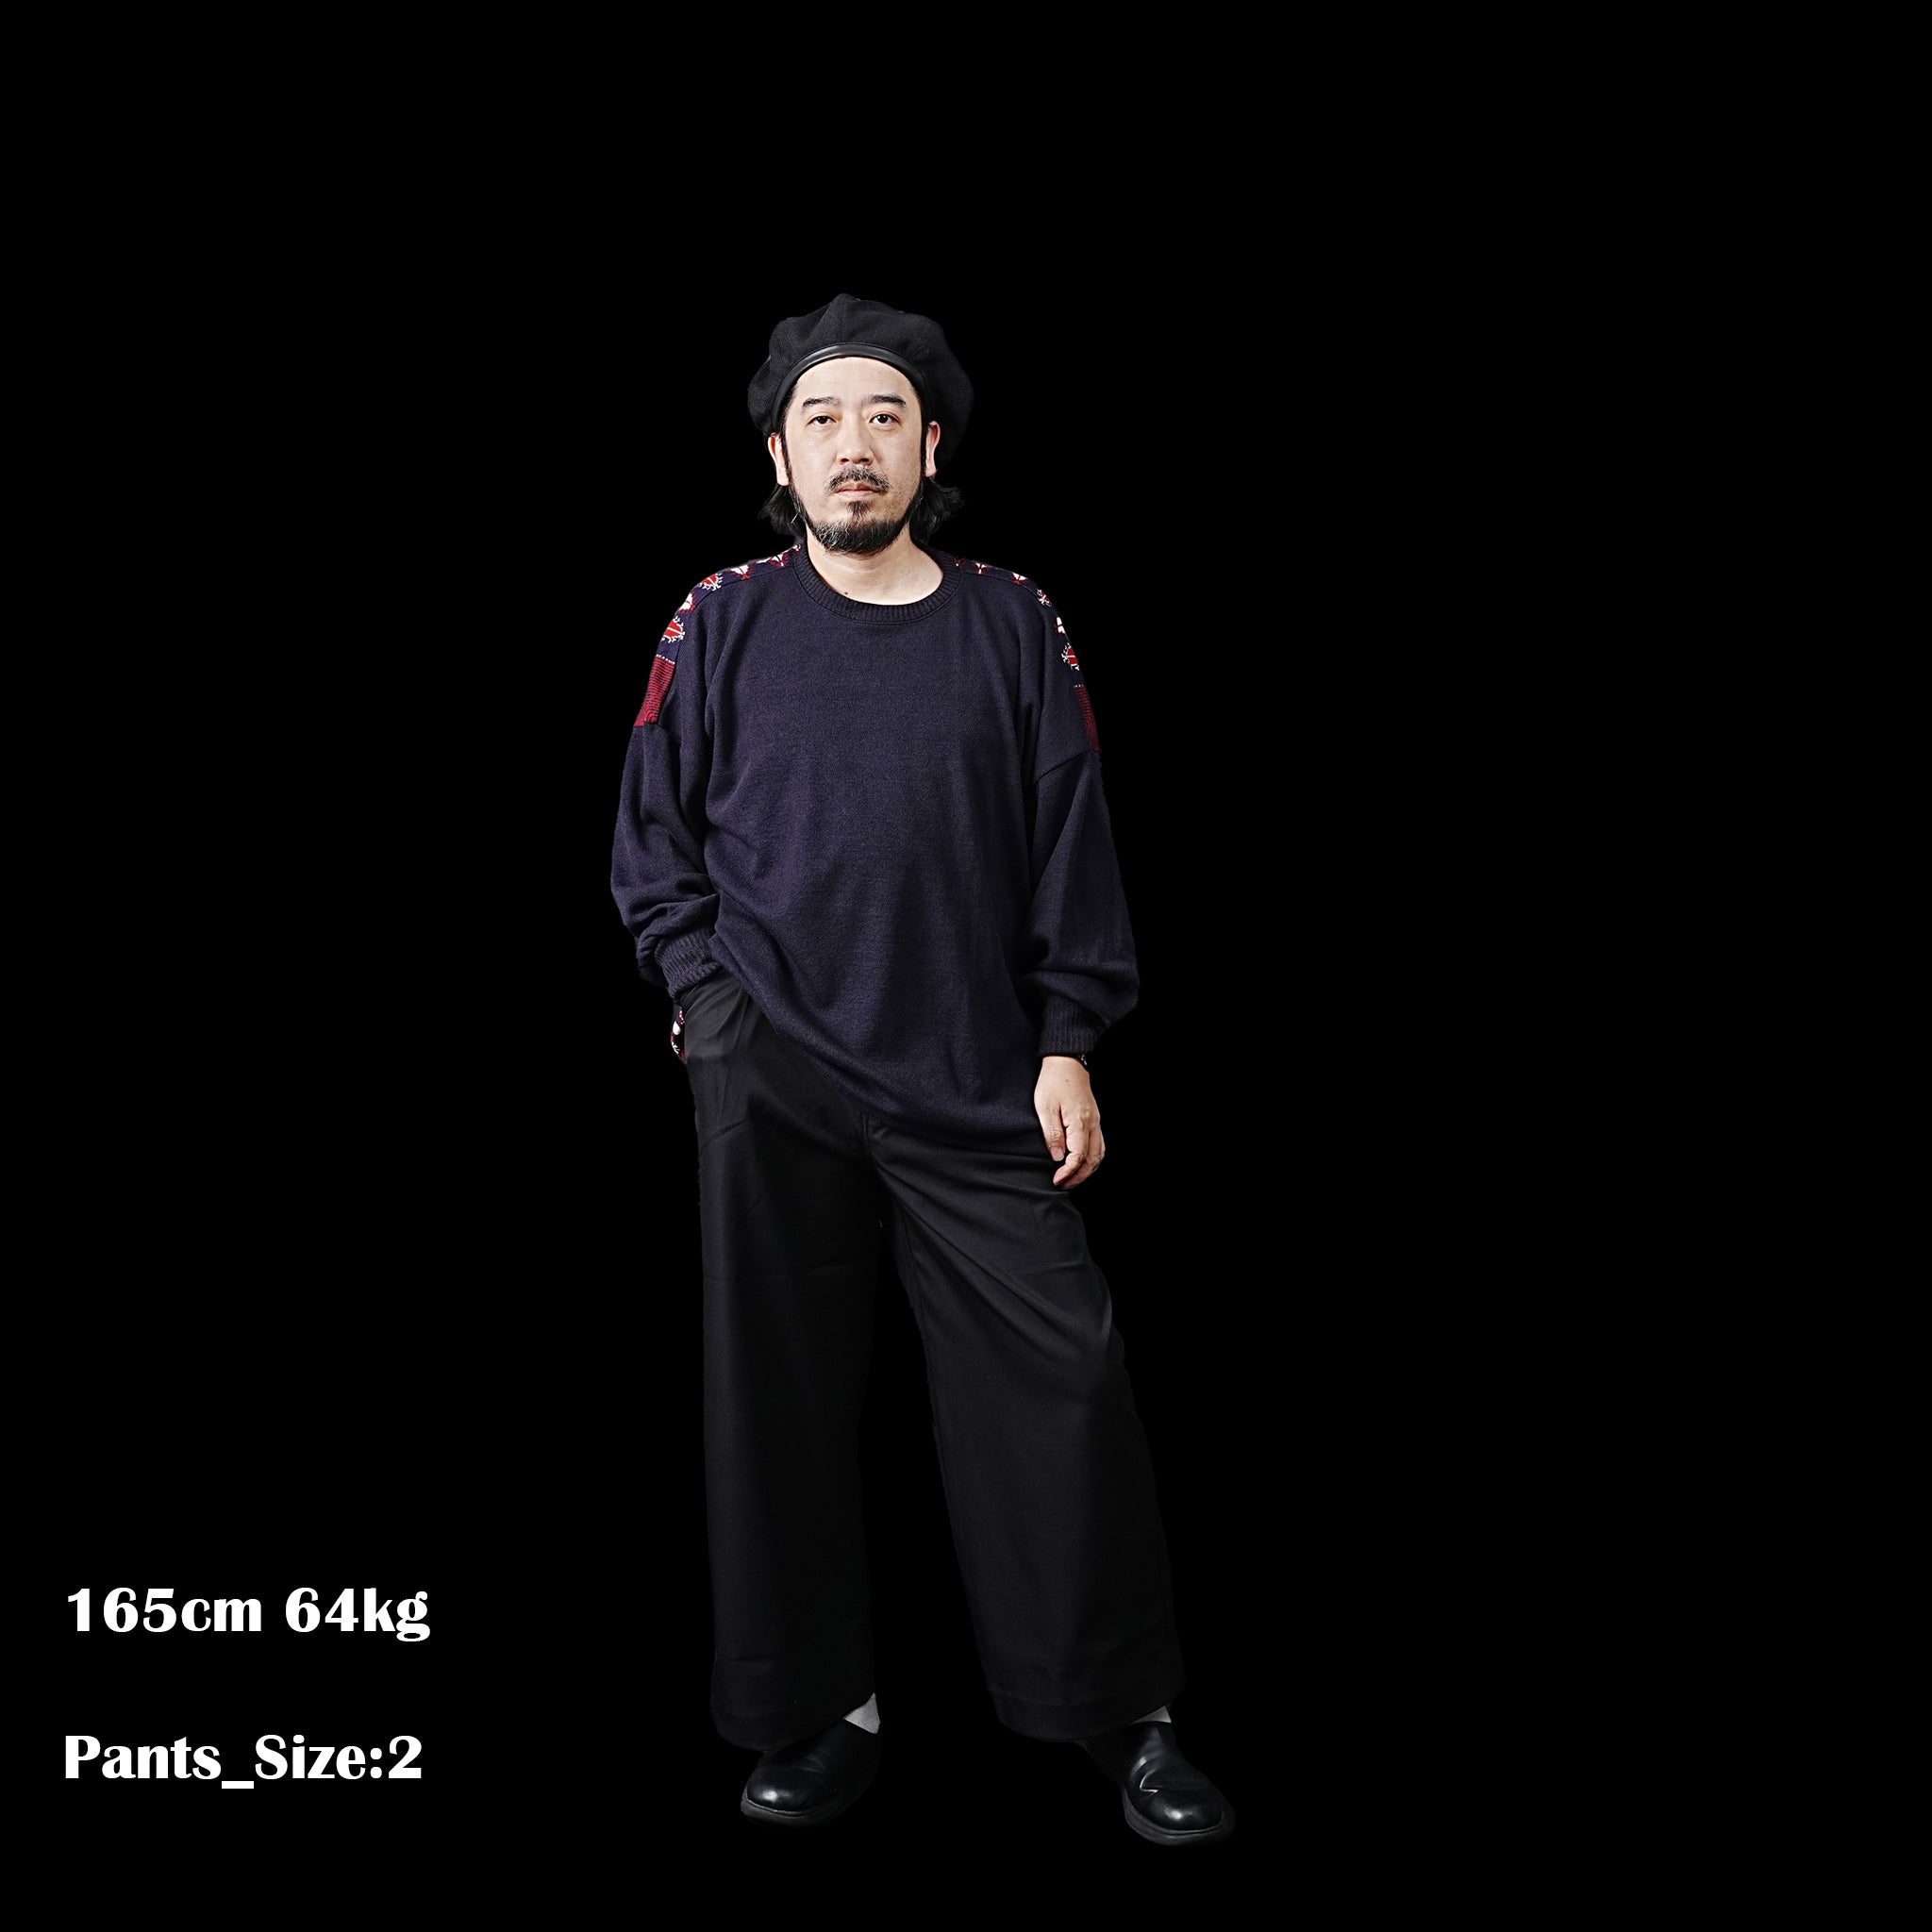 No:23235-9733WH | Name:Work trousers | Color:Black(09)【Garance et Violette_ギャランスエトヴァイオレット】